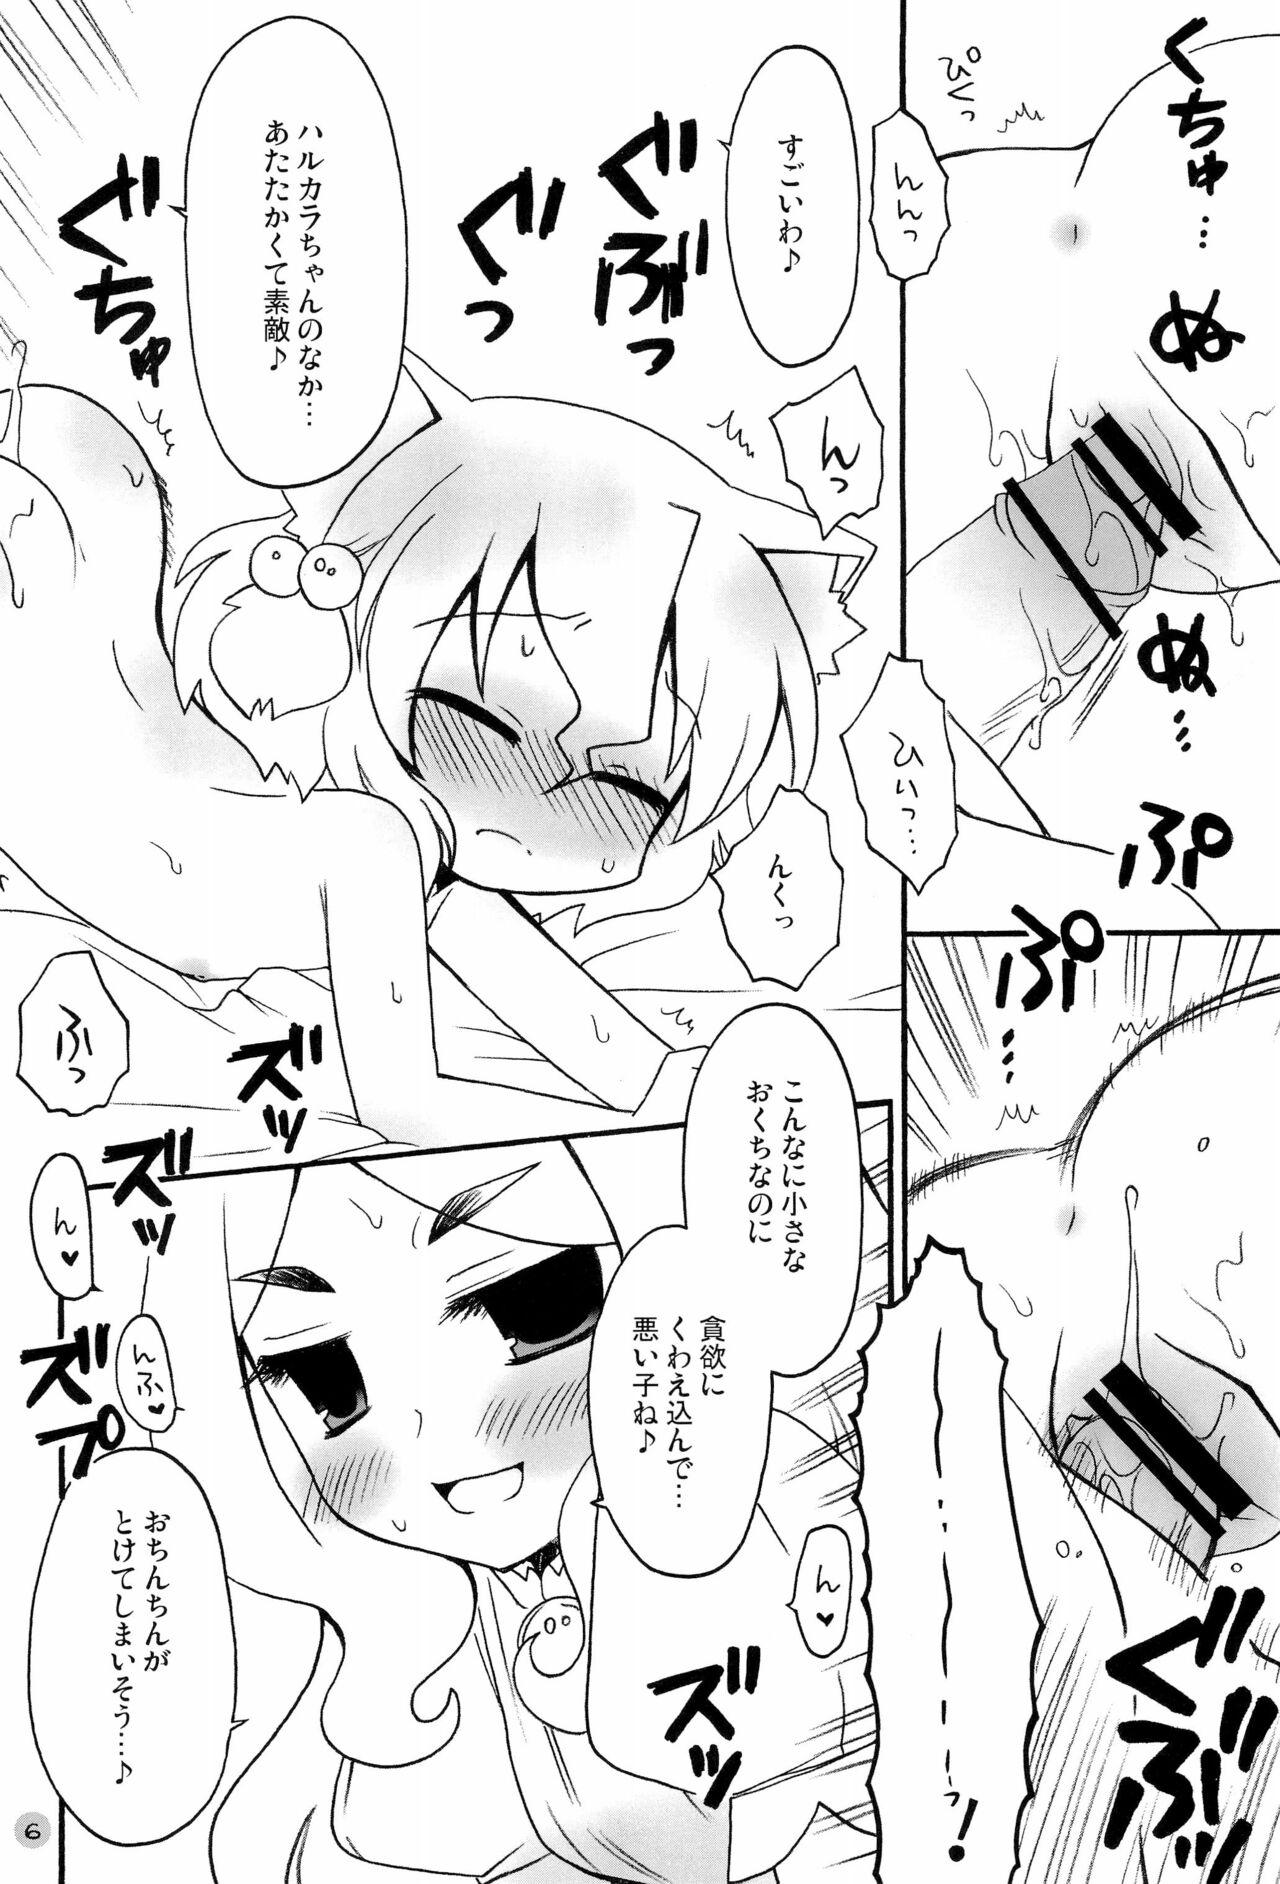 Fucking Harumomo no Tsubomi - 7th dragon Roughsex - Page 6